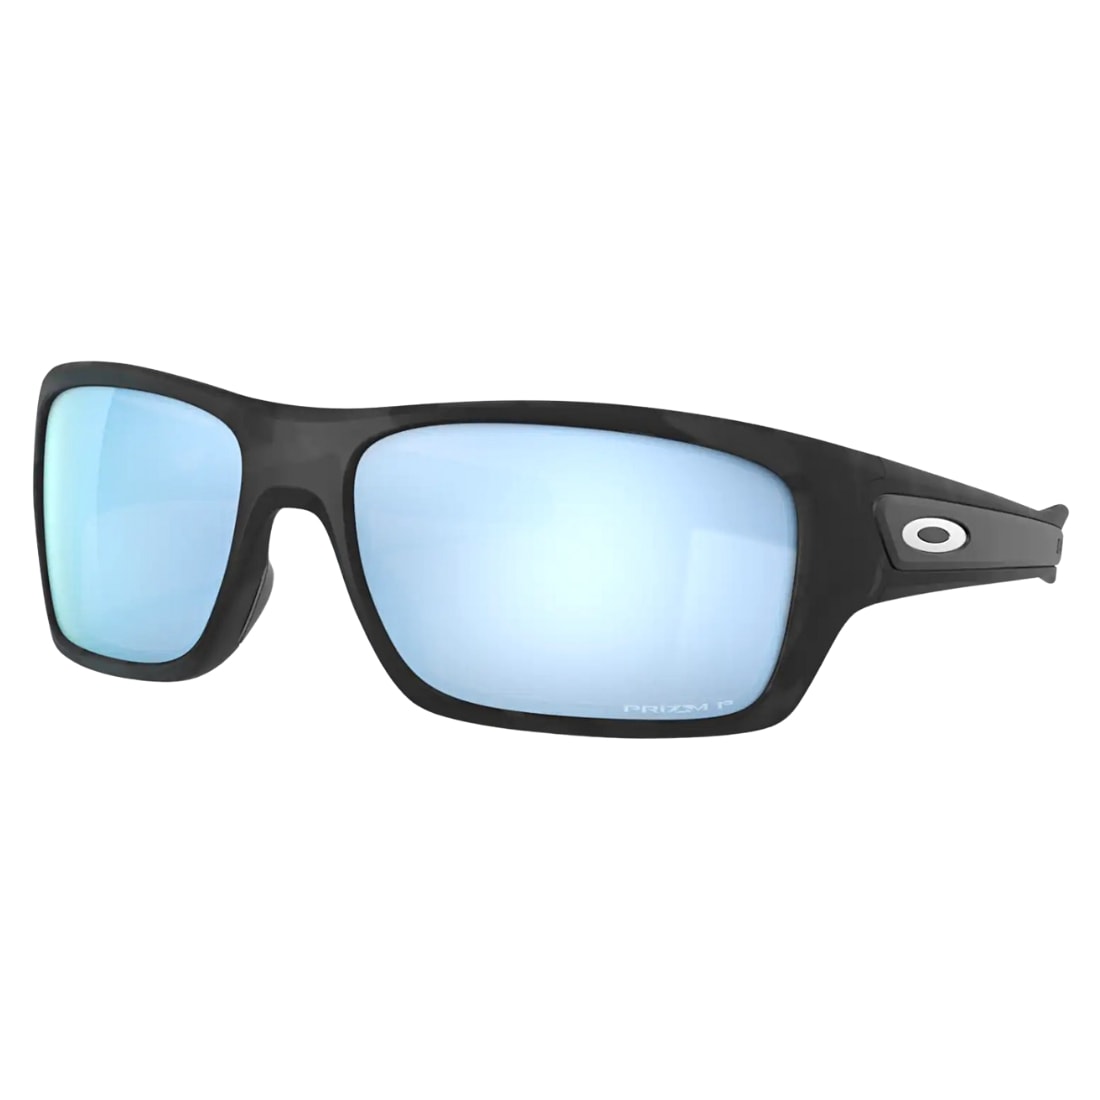 Oakley Turbine Sunglasses - Matte Black Camo/Prizm Deep Water Polarised - Square/Rectangular Sunglasses by Oakley